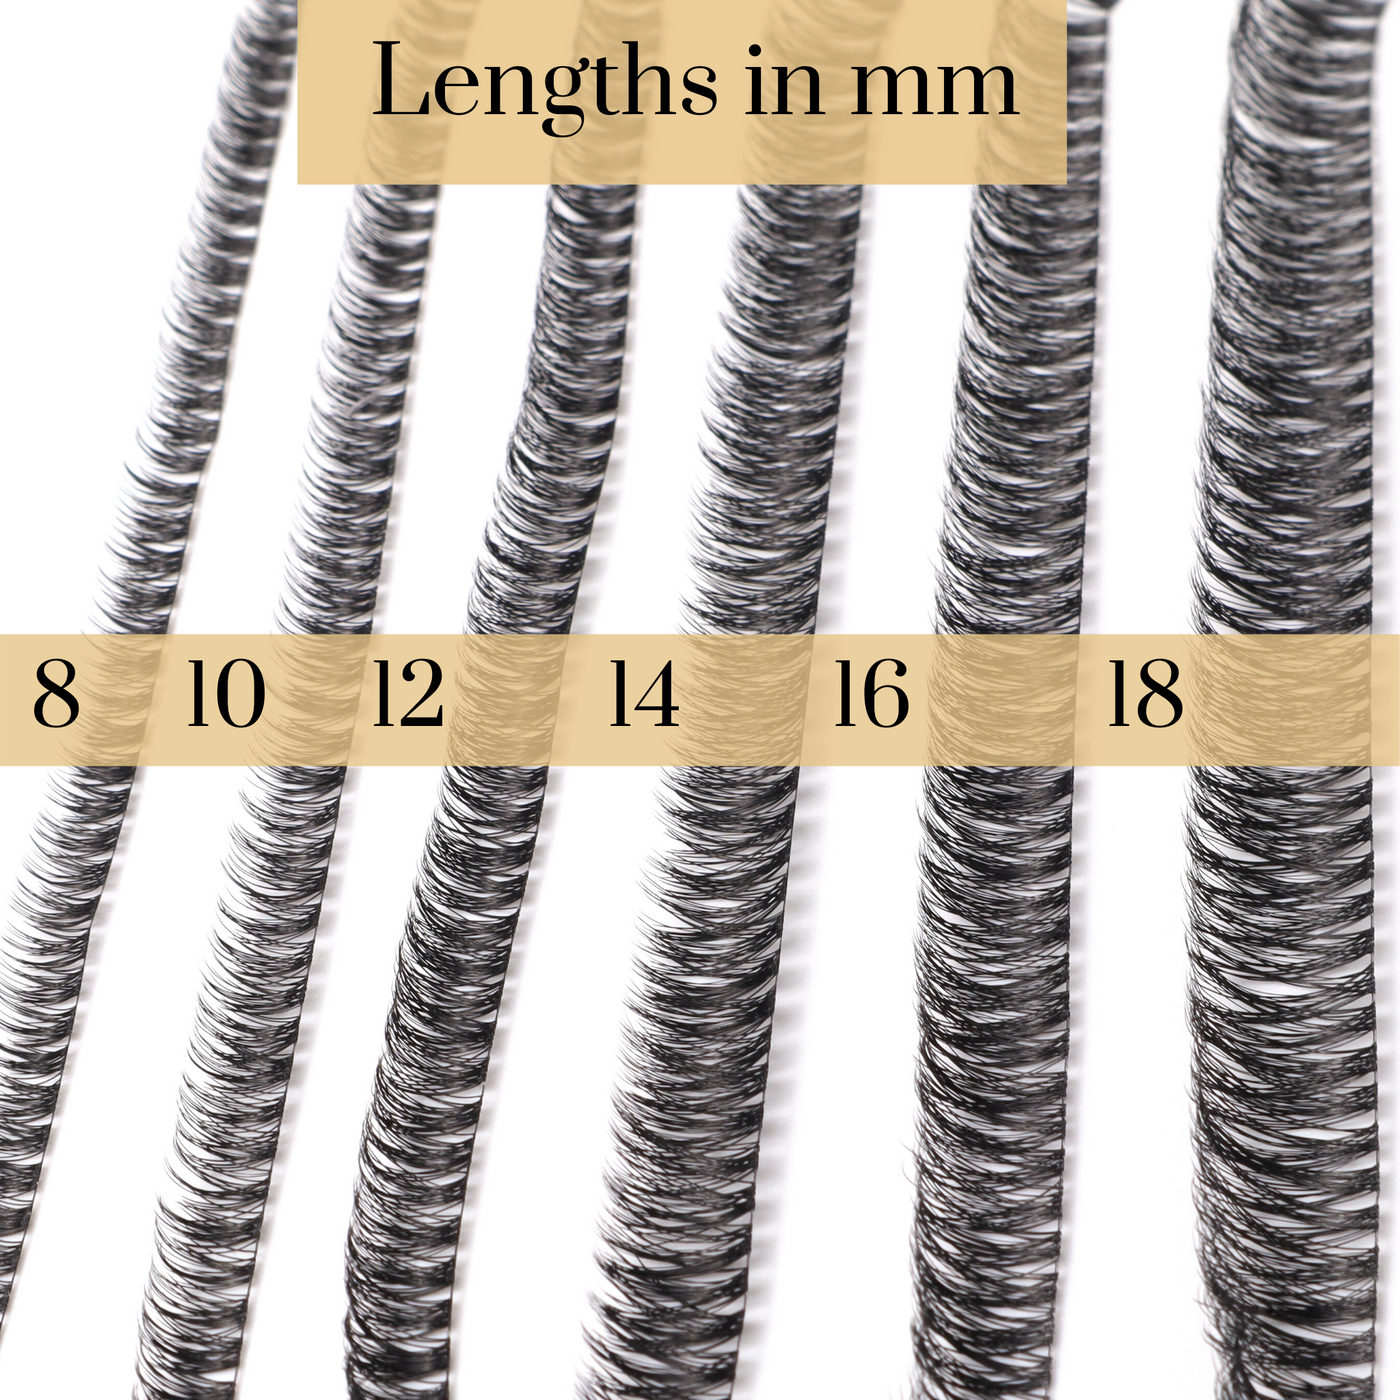 length extension lengths